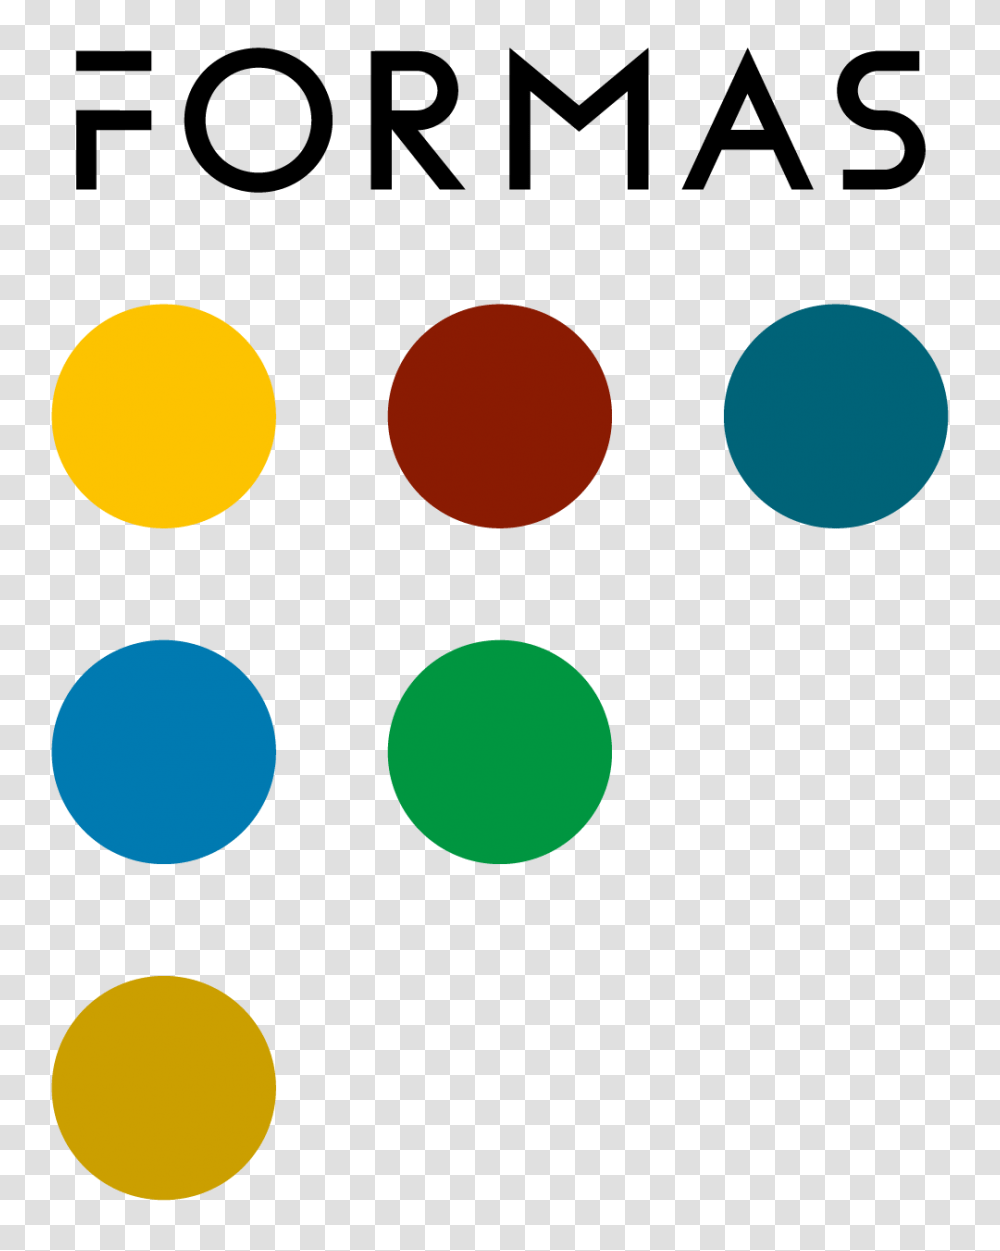 Formas Logos The Swedish Research Council Formas, Texture, Polka Dot Transparent Png